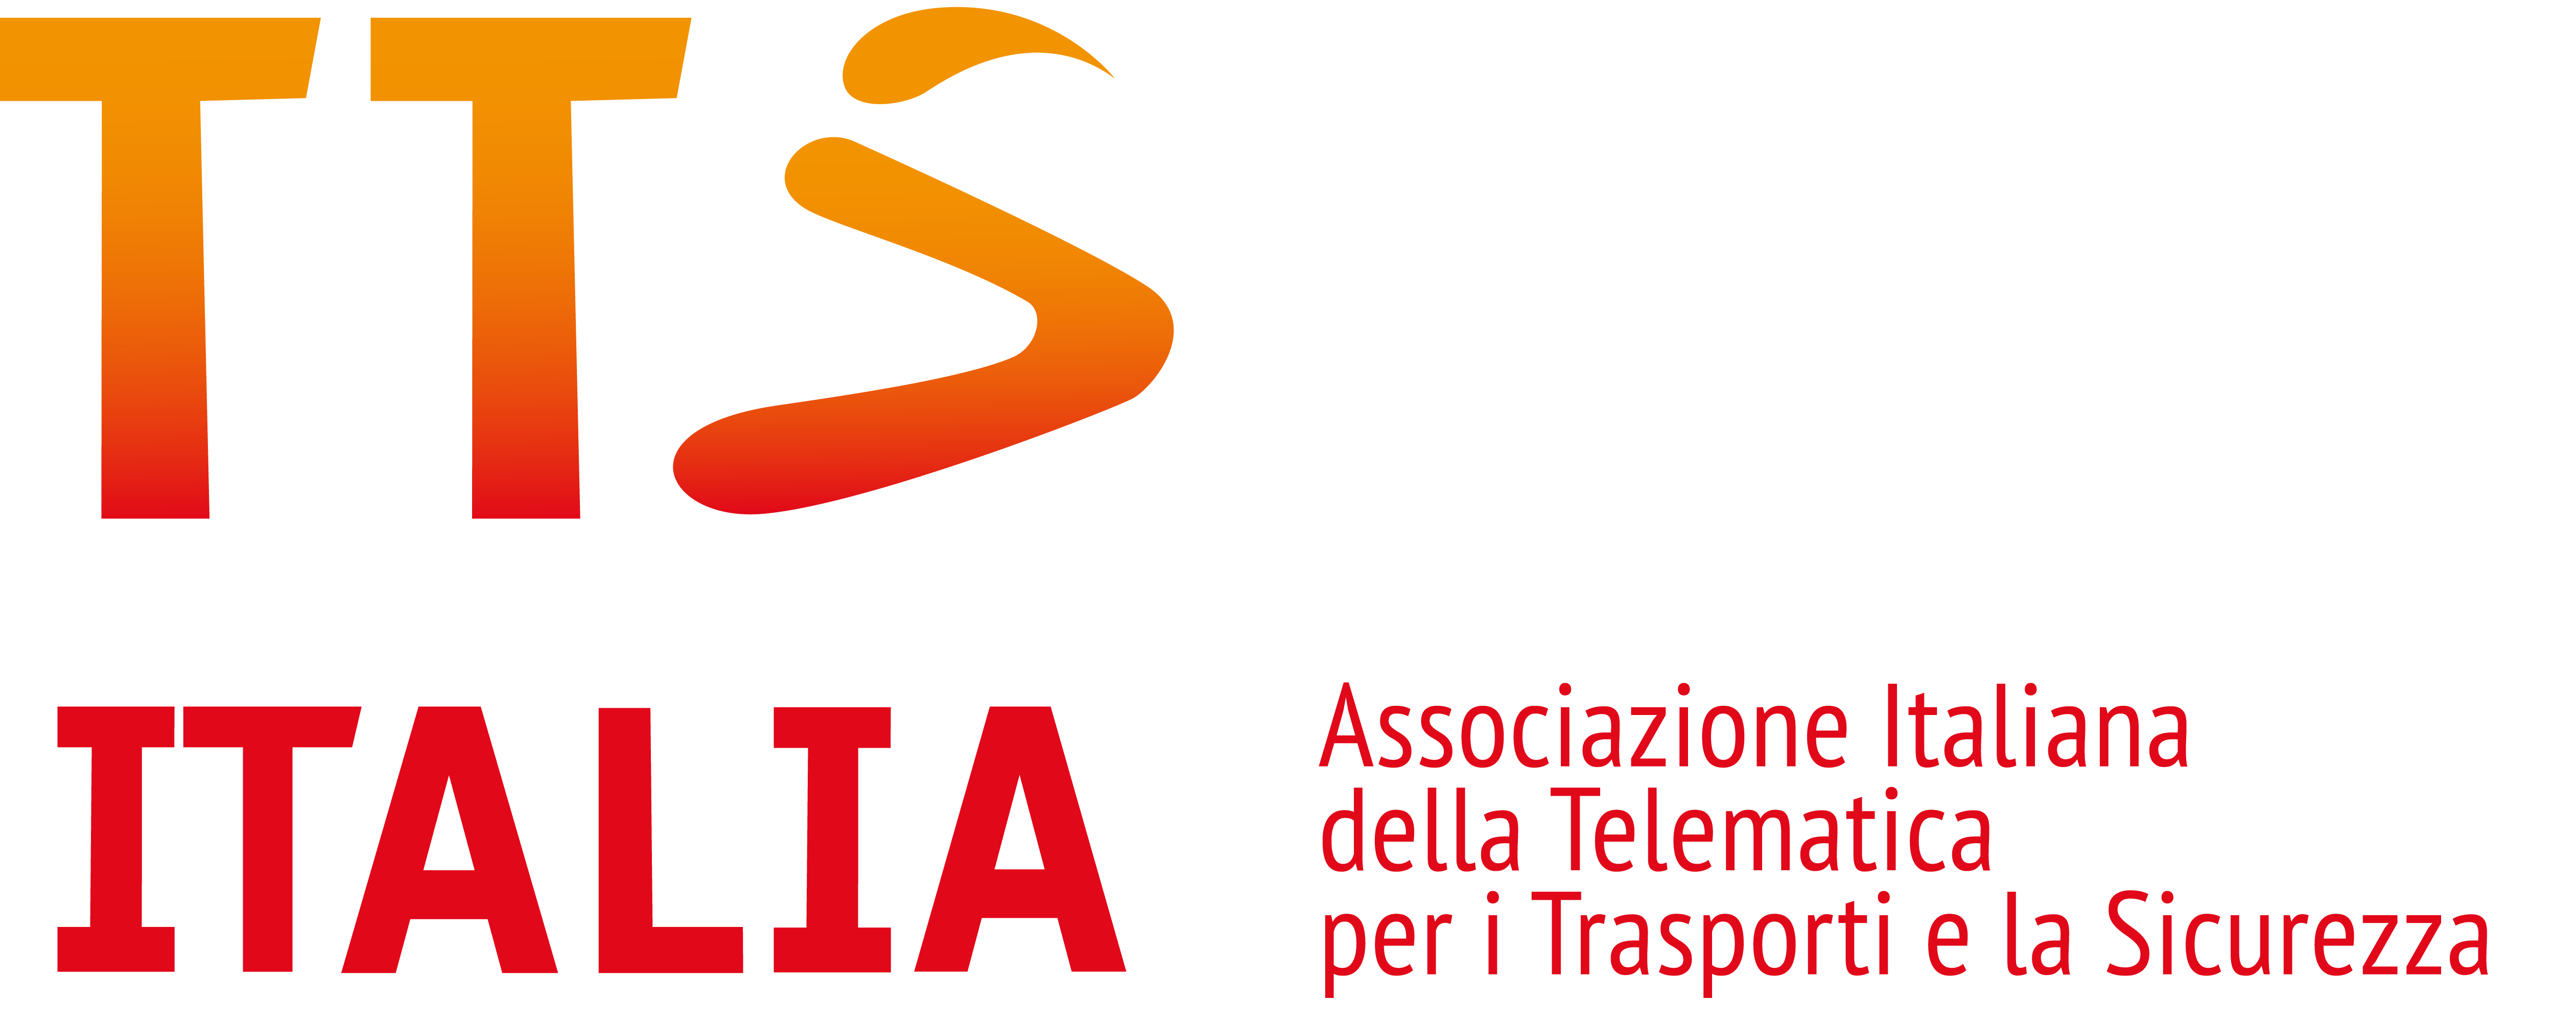 New logo TTS Italia 2